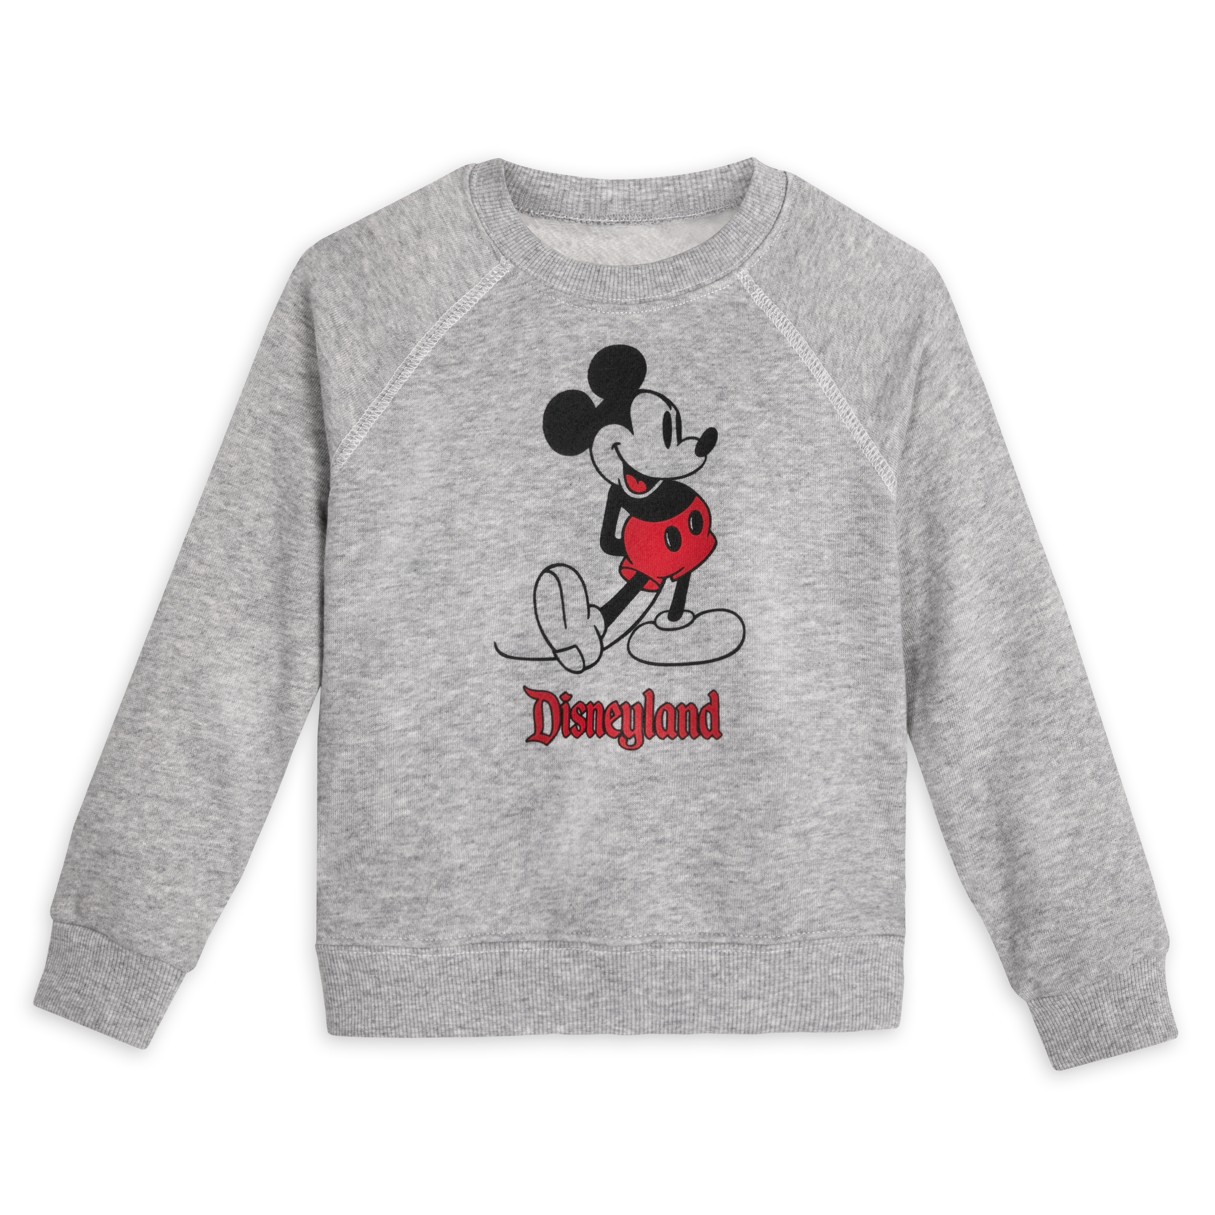 Mickey Mouse Classic Sweatshirt for Kids – Disneyland – Gray